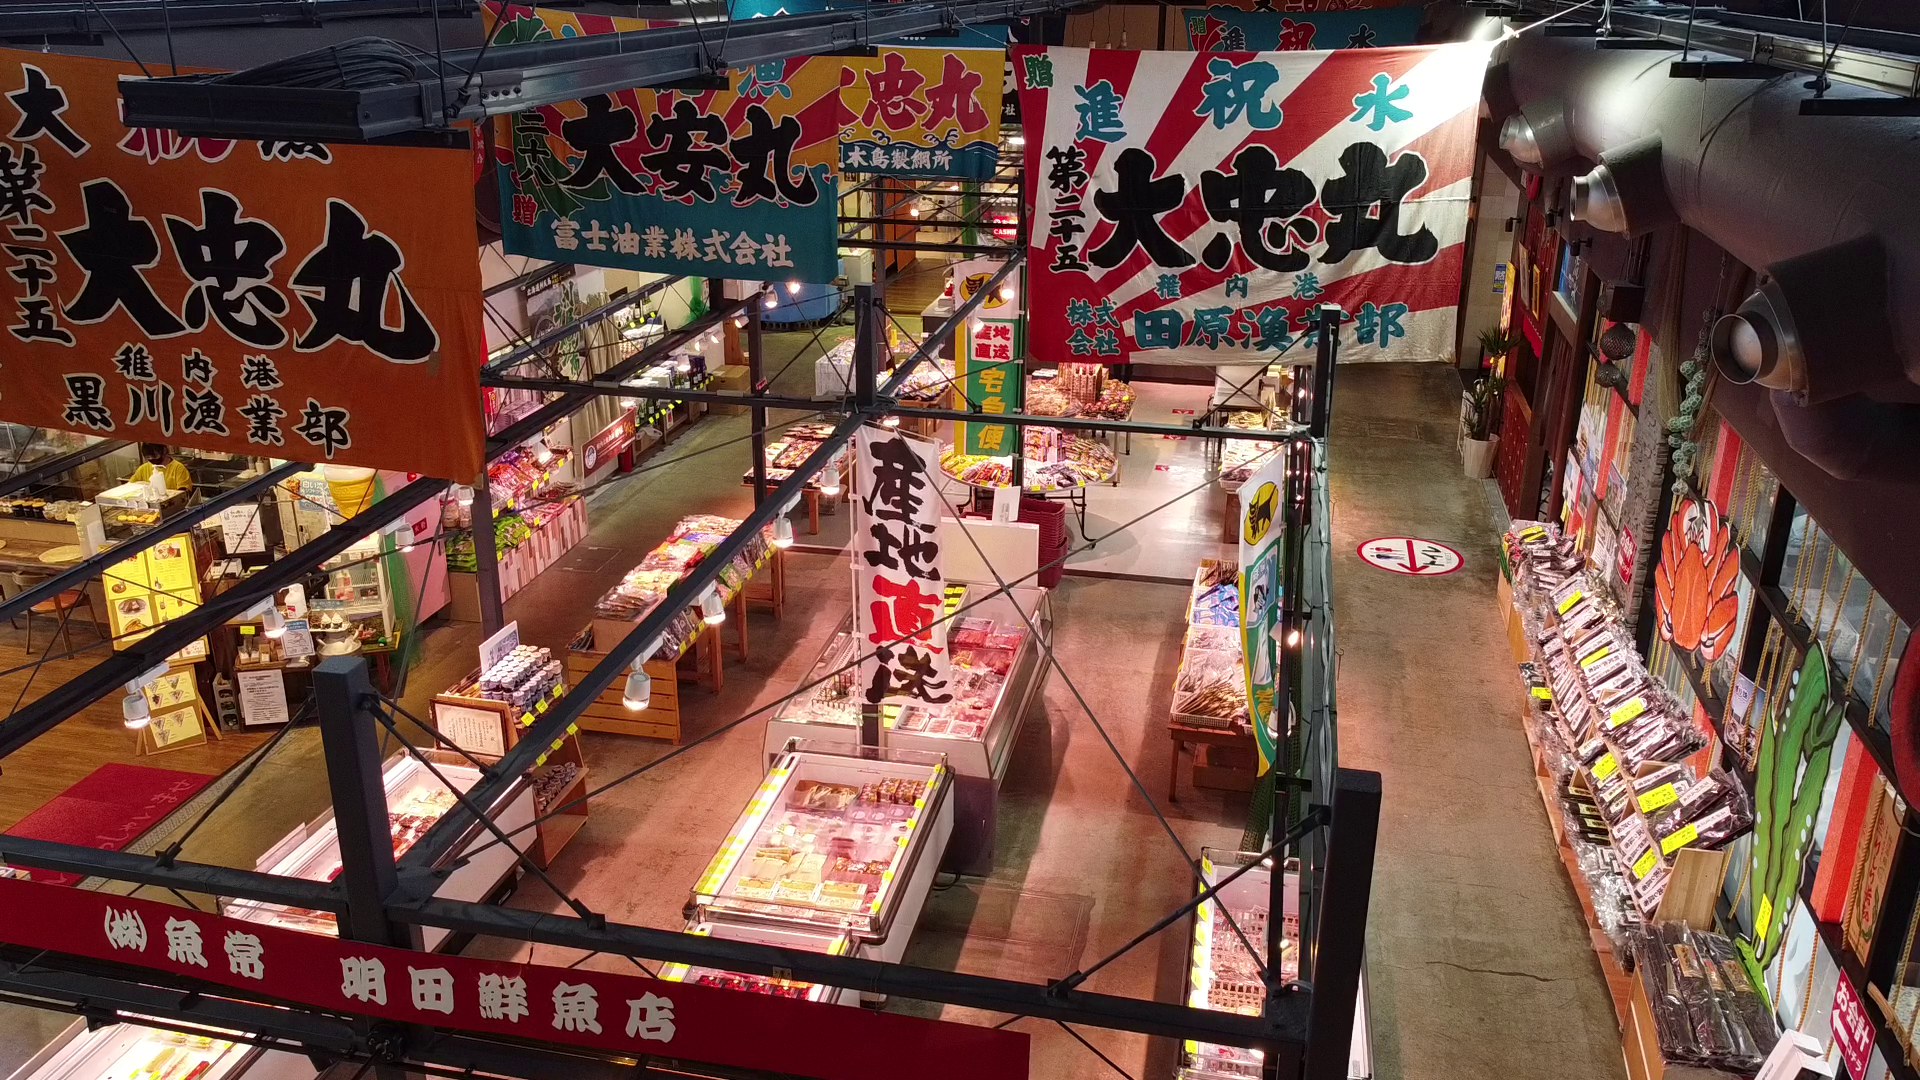 Fukko Market – Get Some Shopping Done at Japan’s Northernmost Market